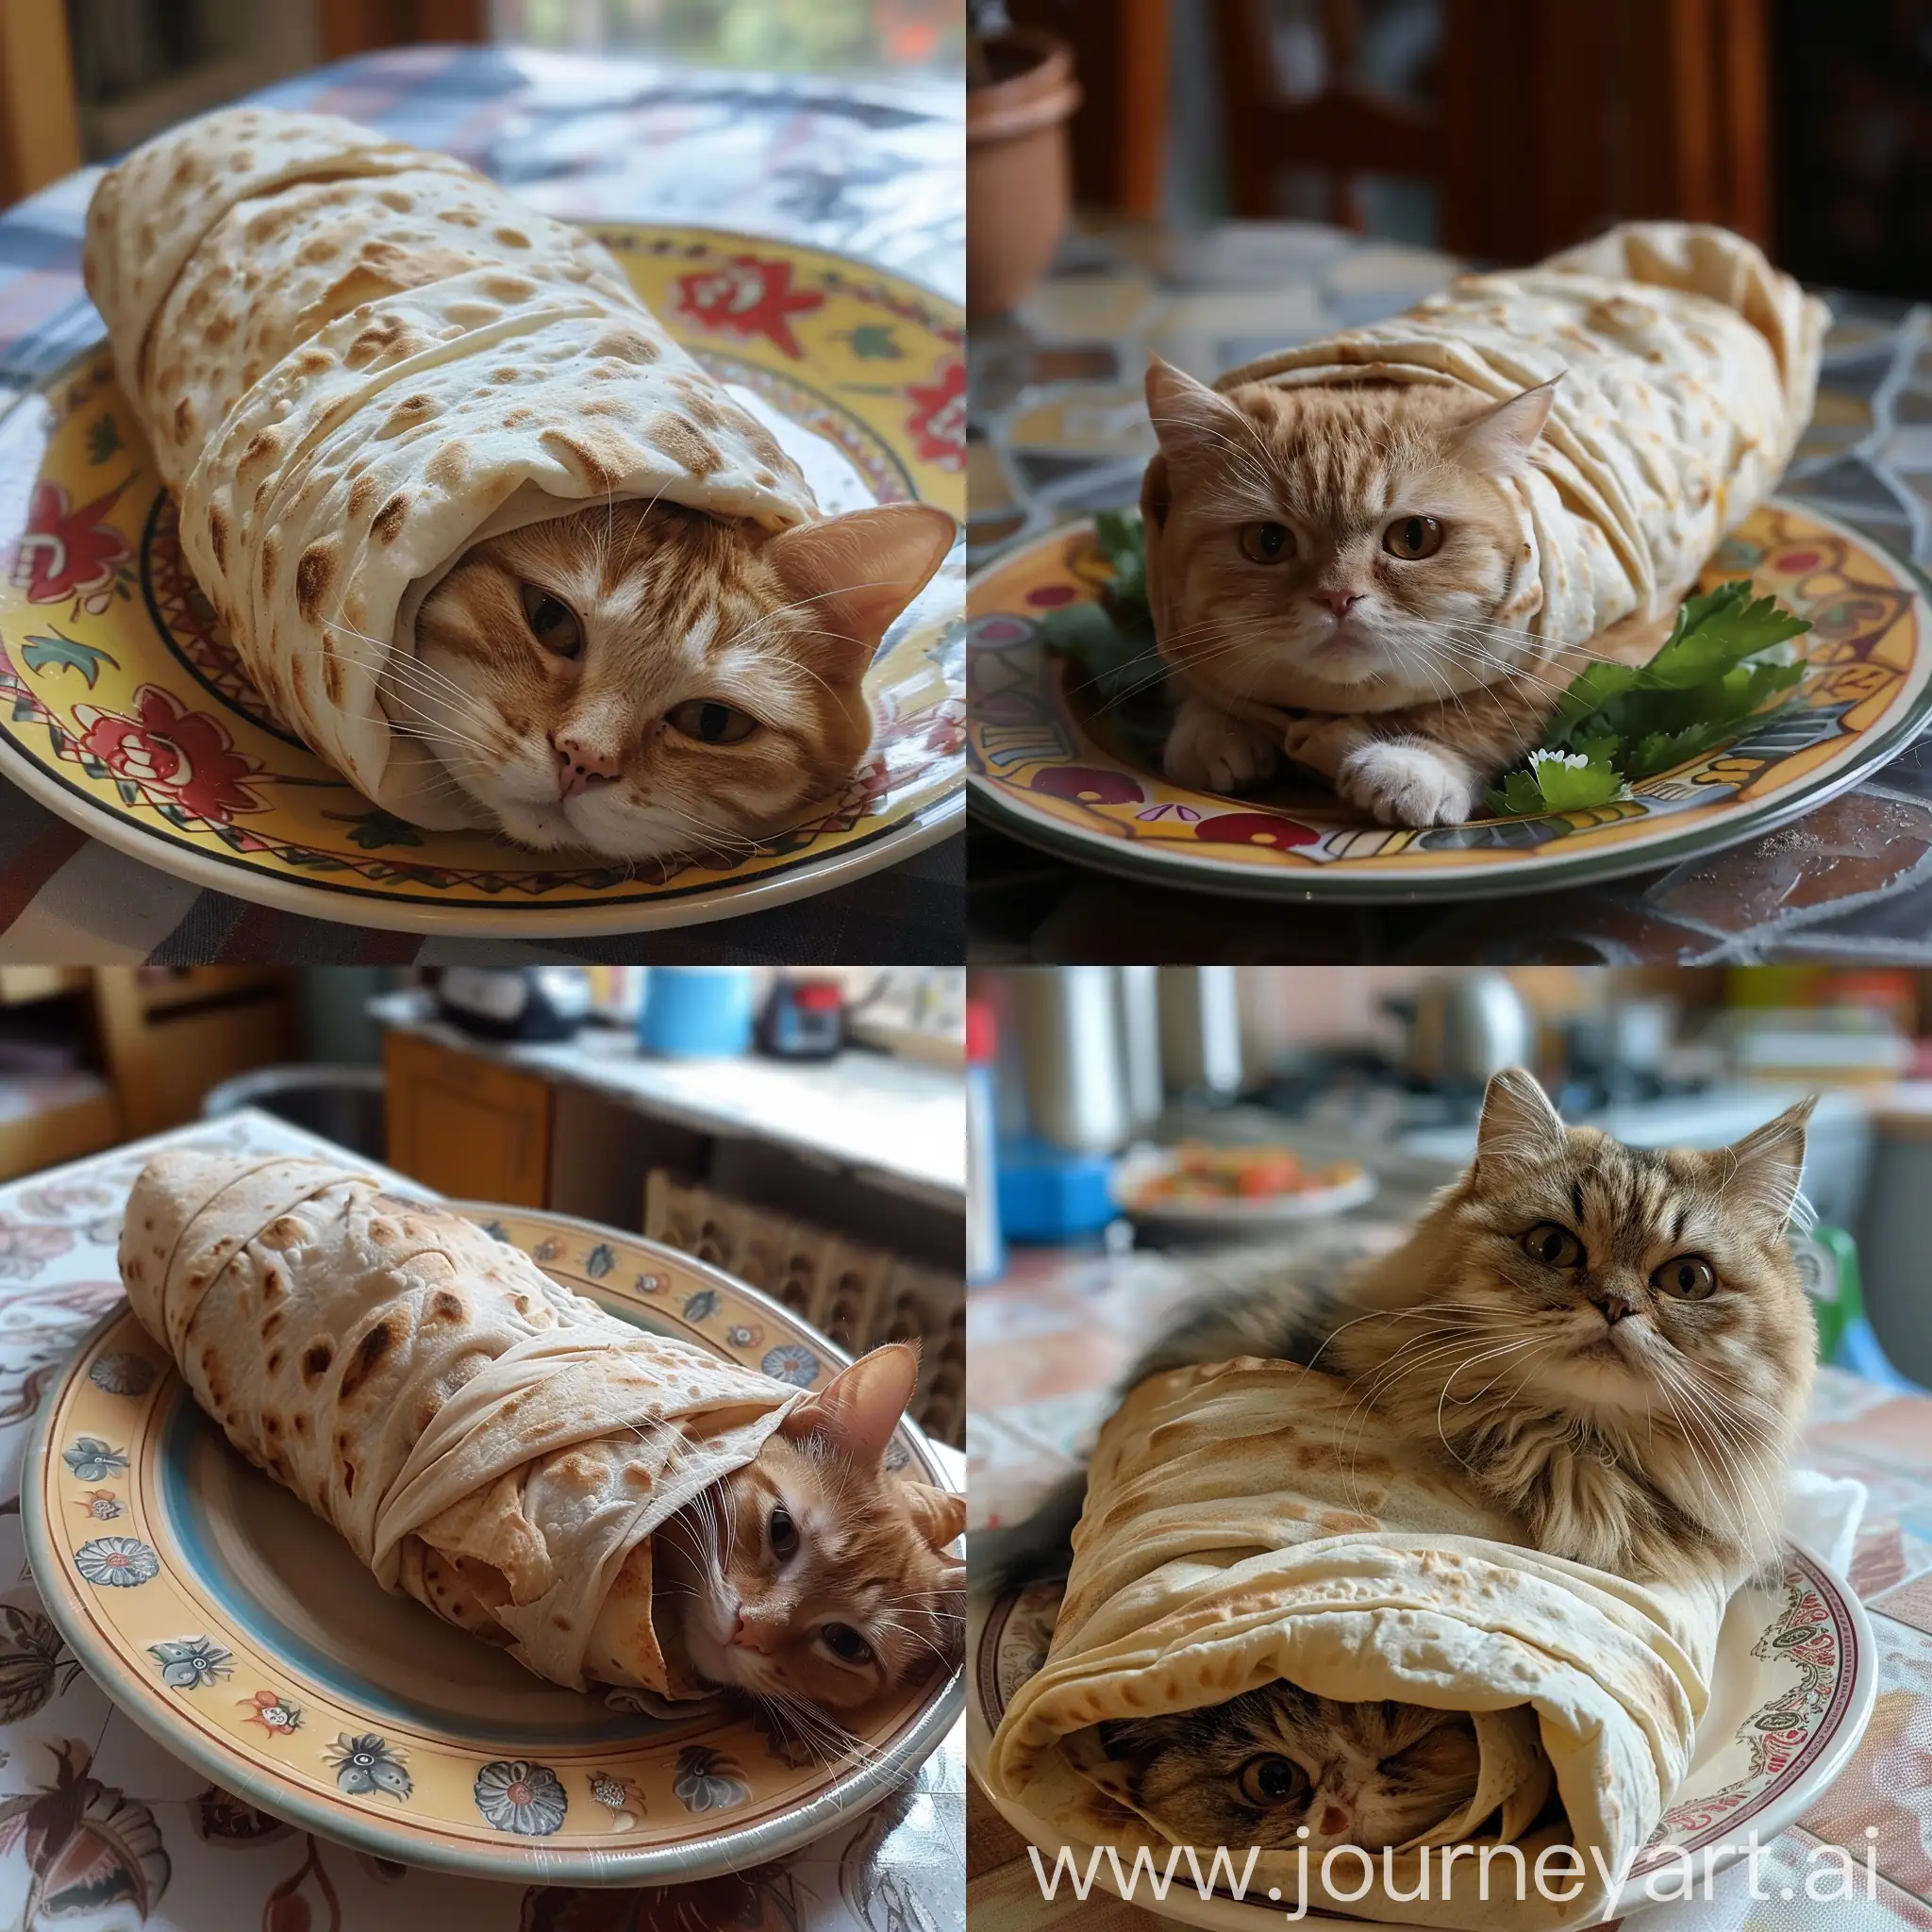 Cat-Wrapped-in-Lavash-Adorable-Feline-in-ShawarmaLike-Wrap